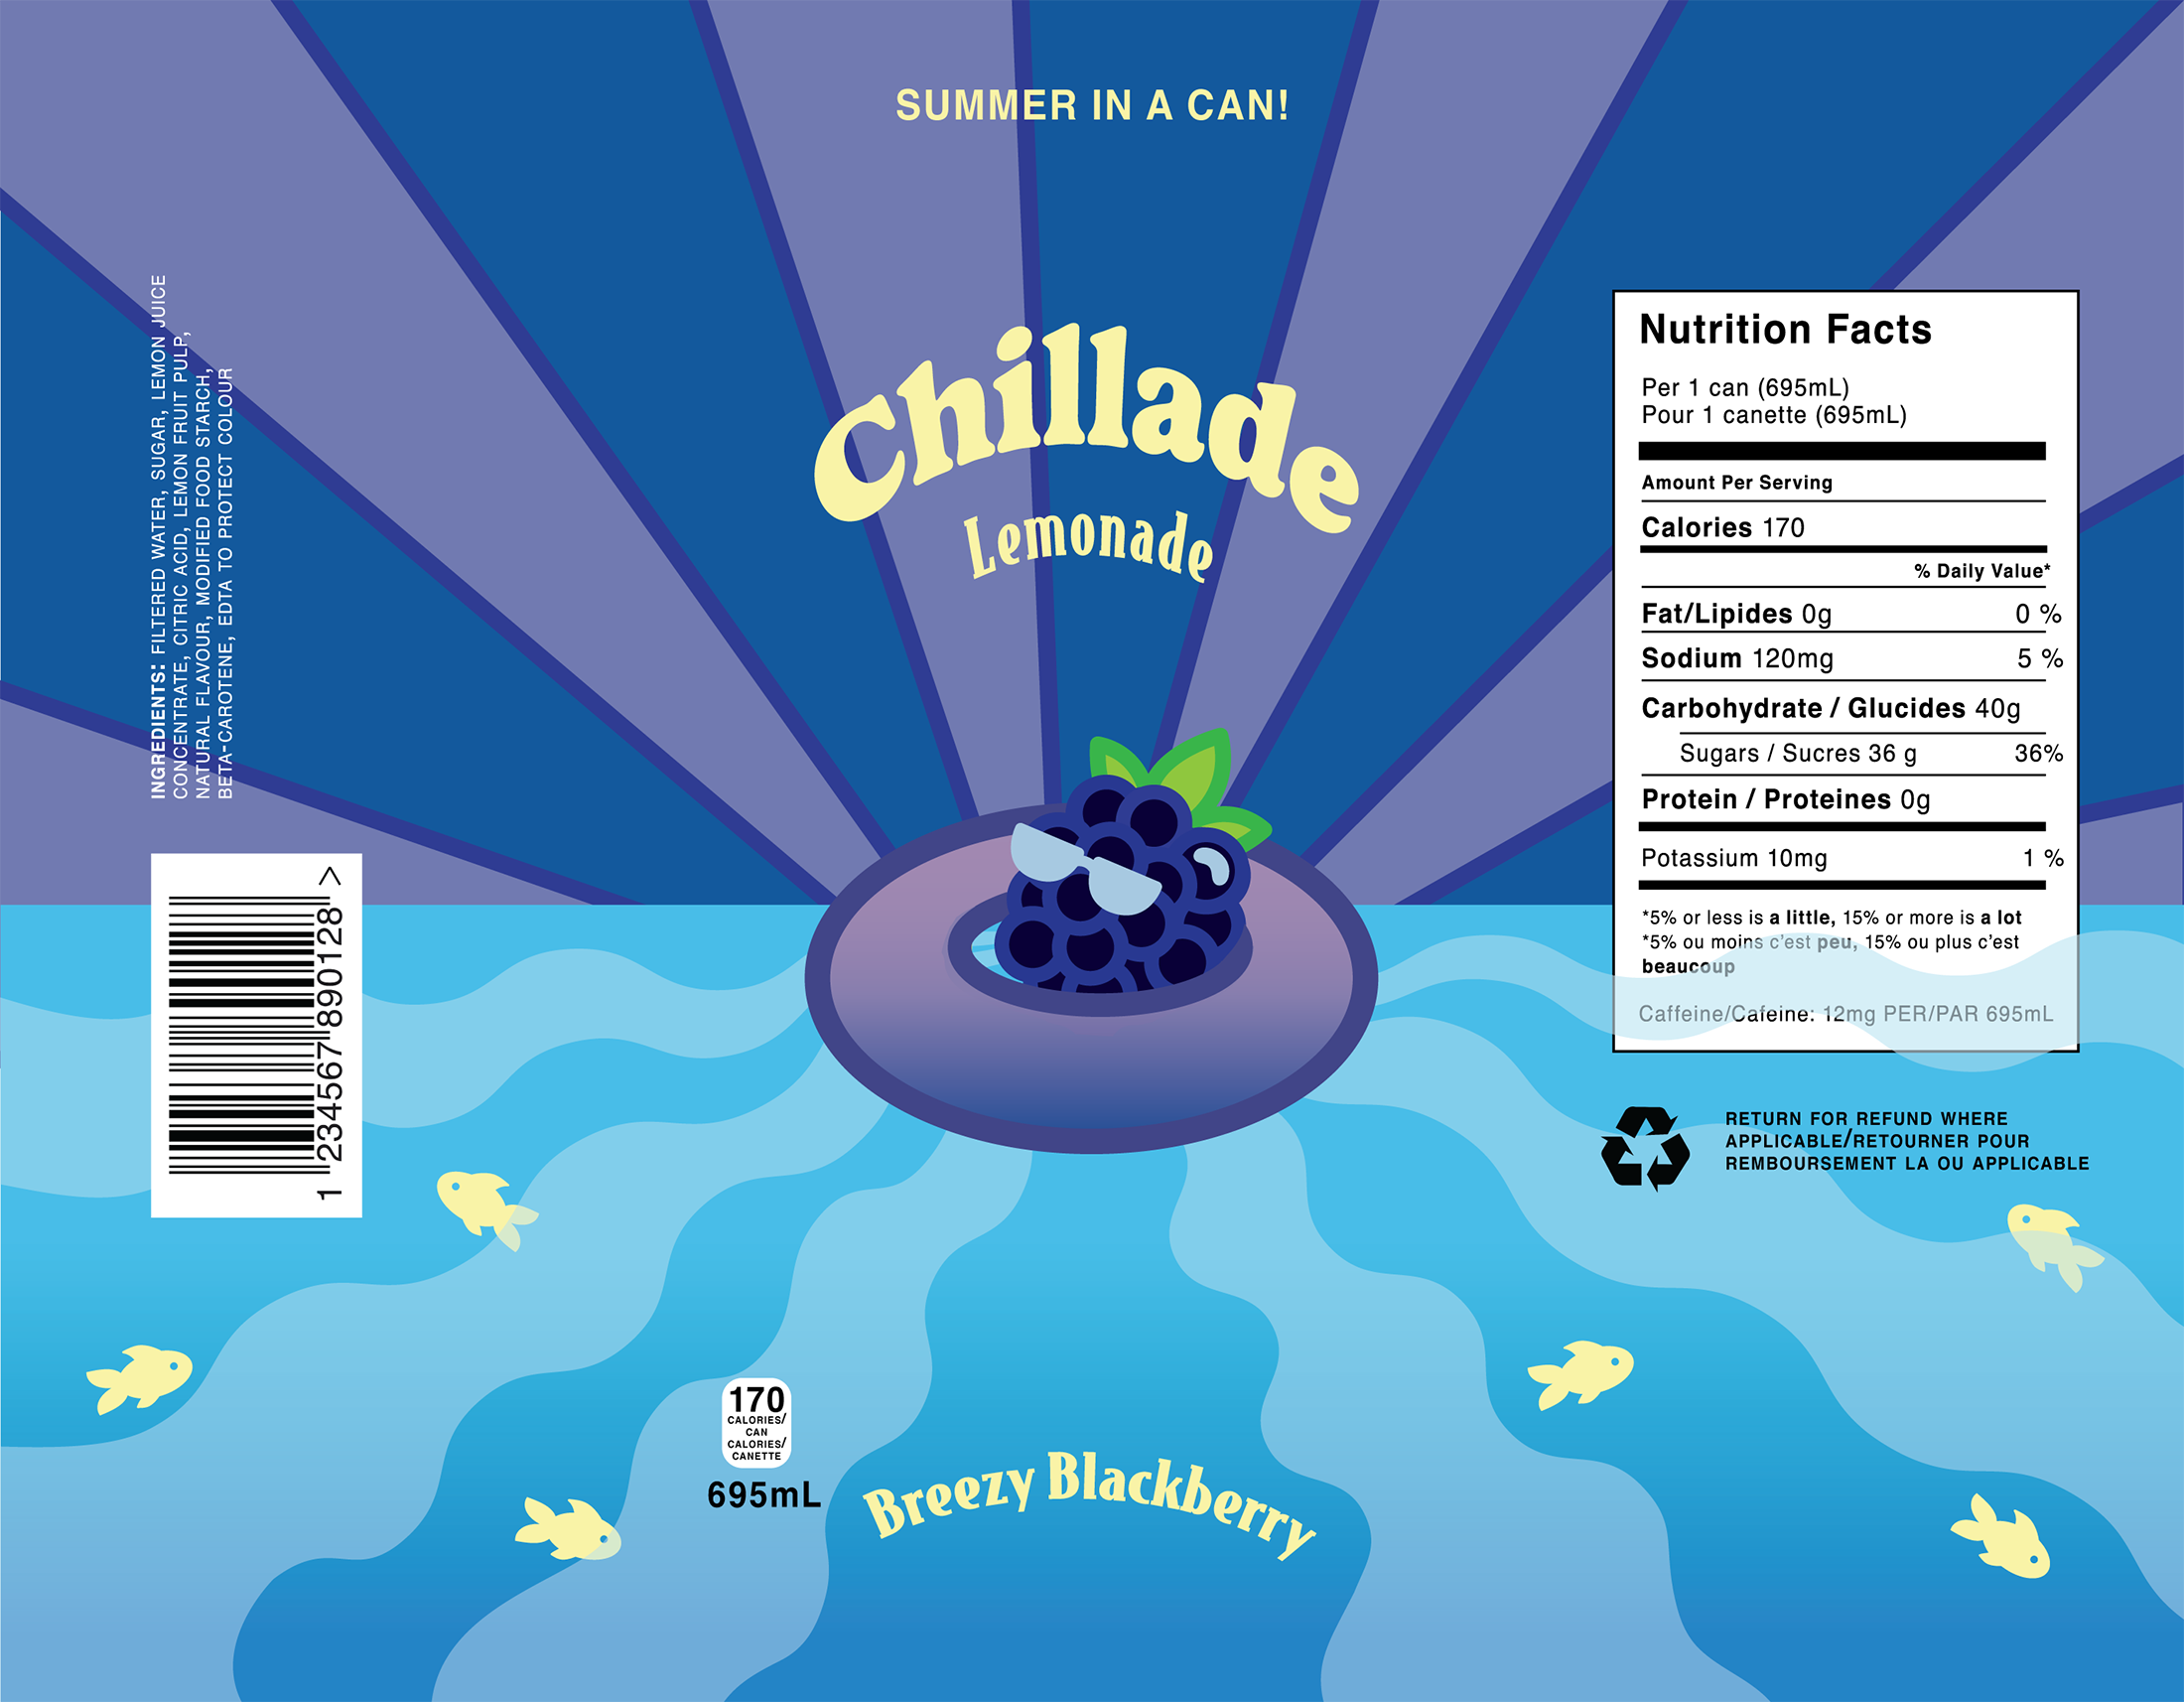 Product Packaging - Chillade Lemonade - Image 4